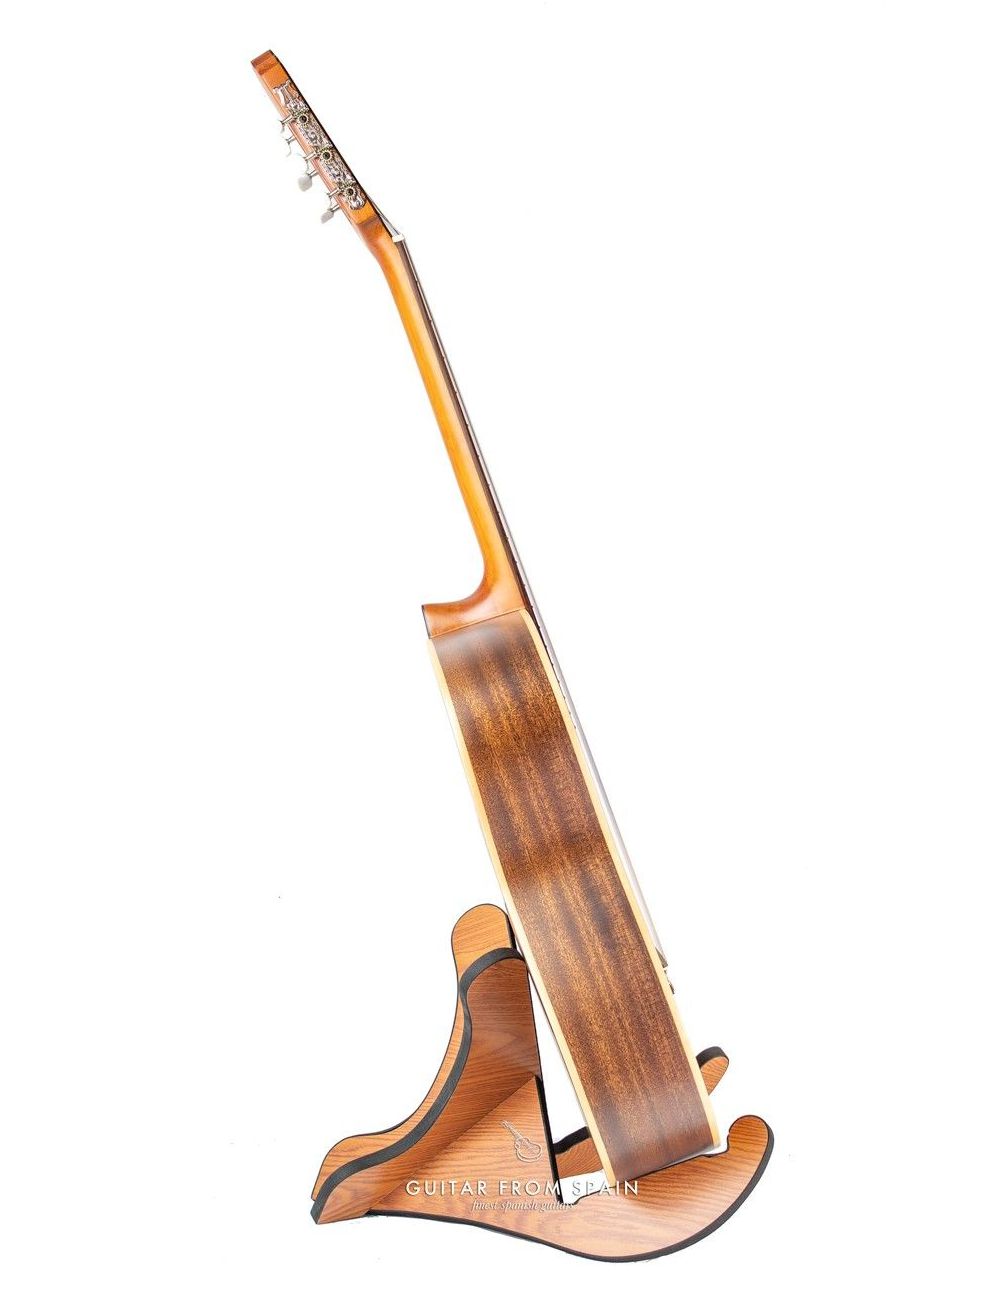 OZONE S-12 Soporte de guitarra clásica de madera